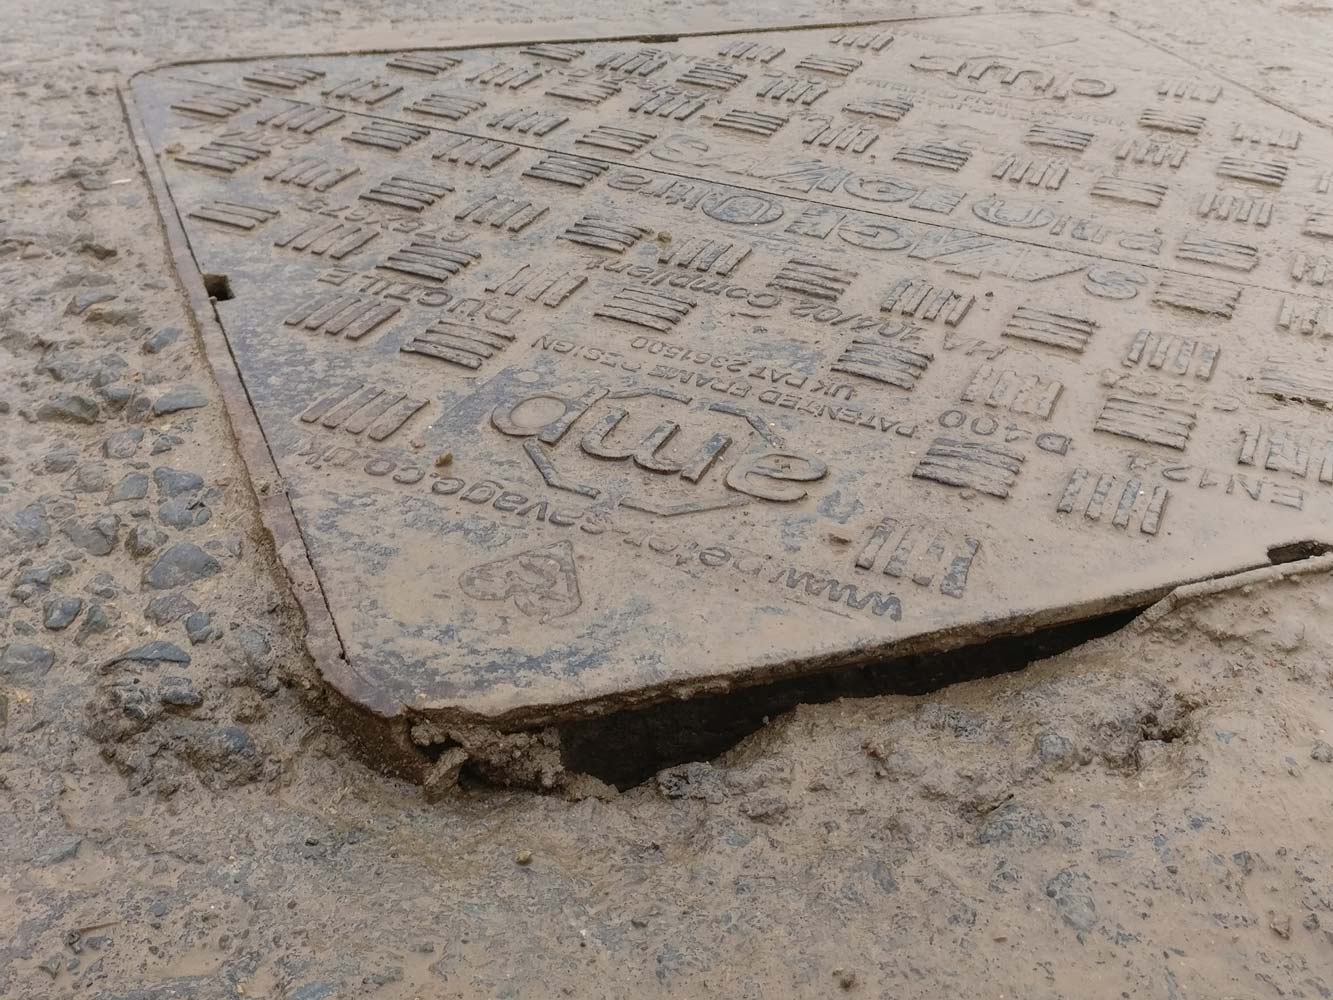 Manhole cover exposed to damage